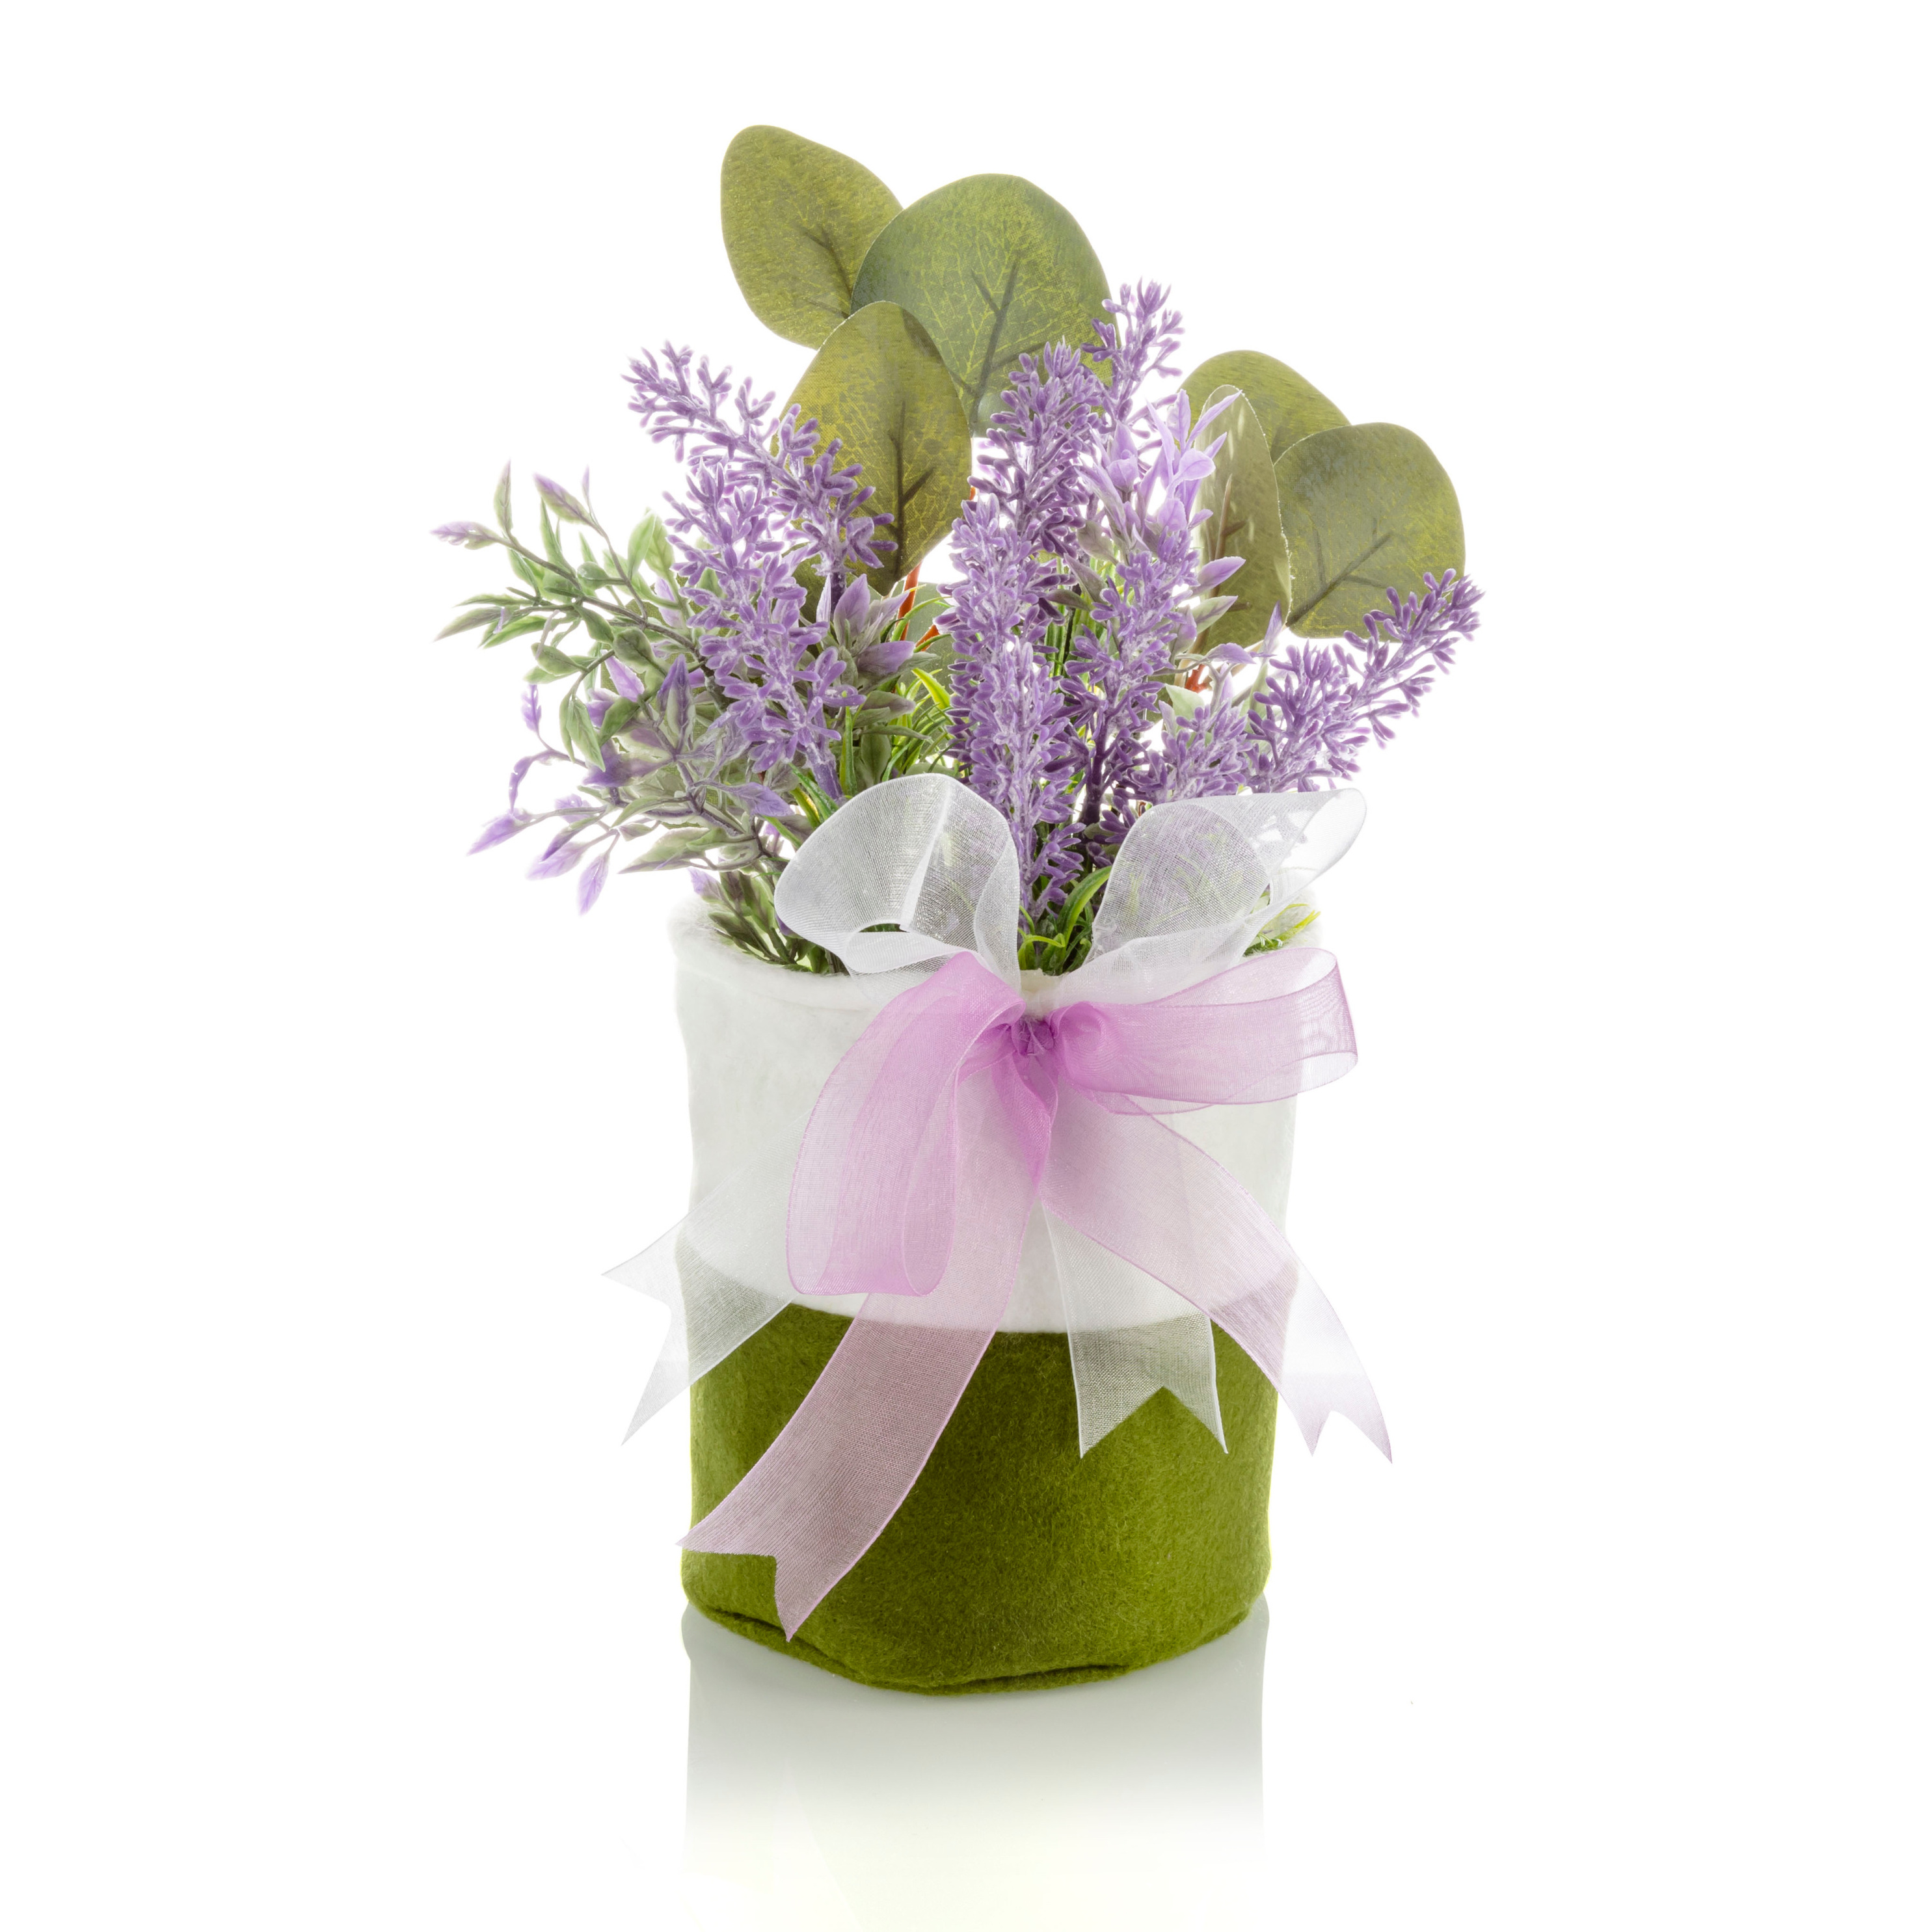 Kunstpflanze Lavendel im Topf jetzt bei Weltbild.de bestellen